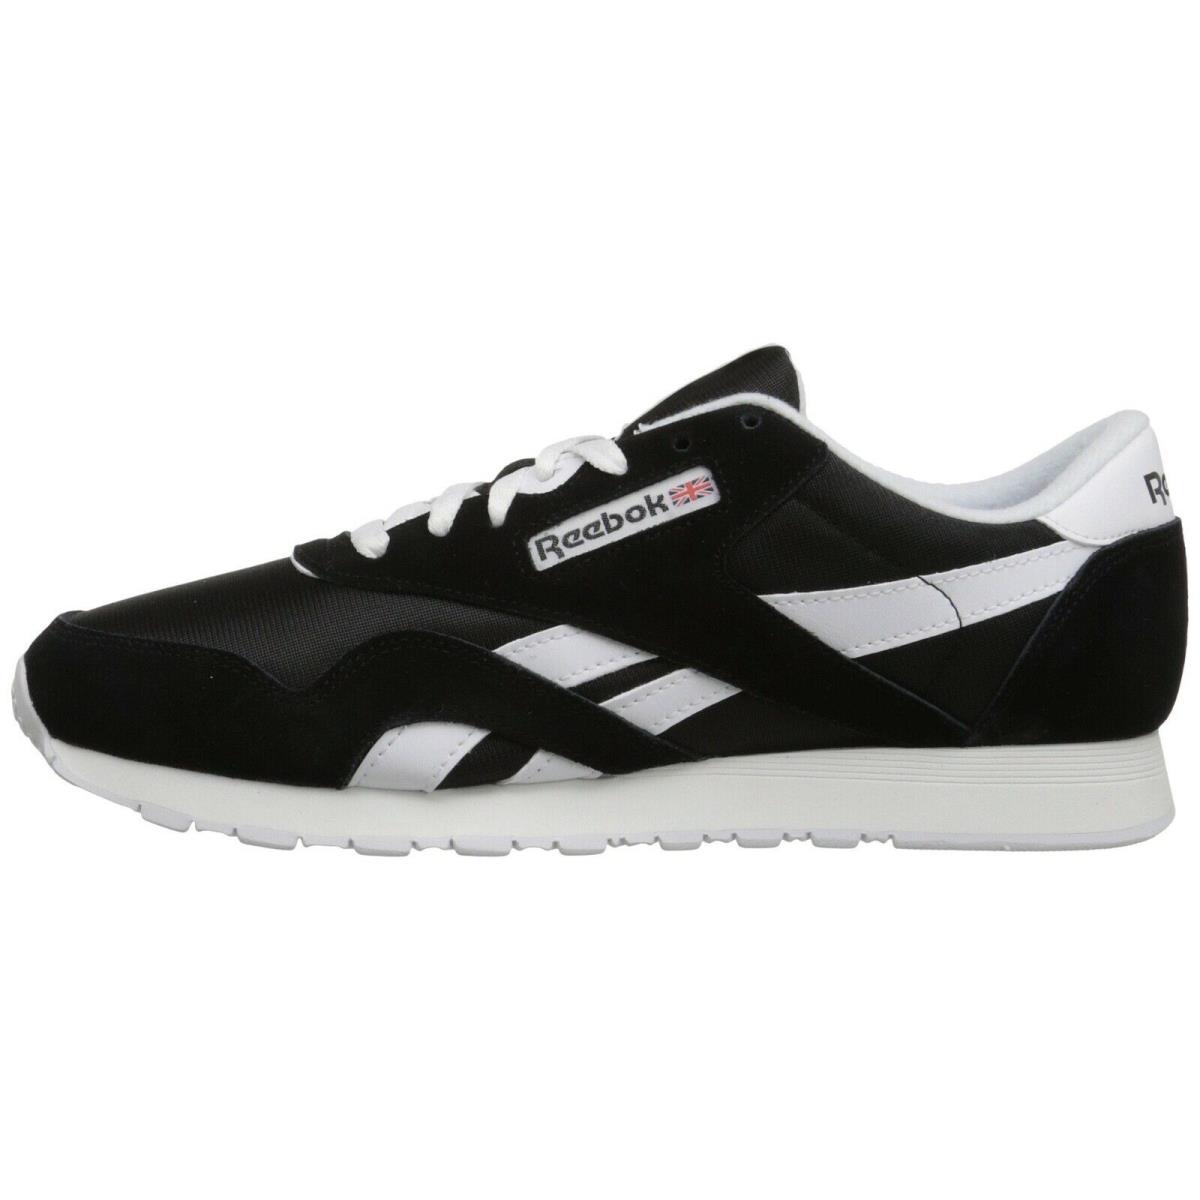 Reebok Men Classic Nylon Running Shoe Black / Black / White FV1592 / 6604 - Black